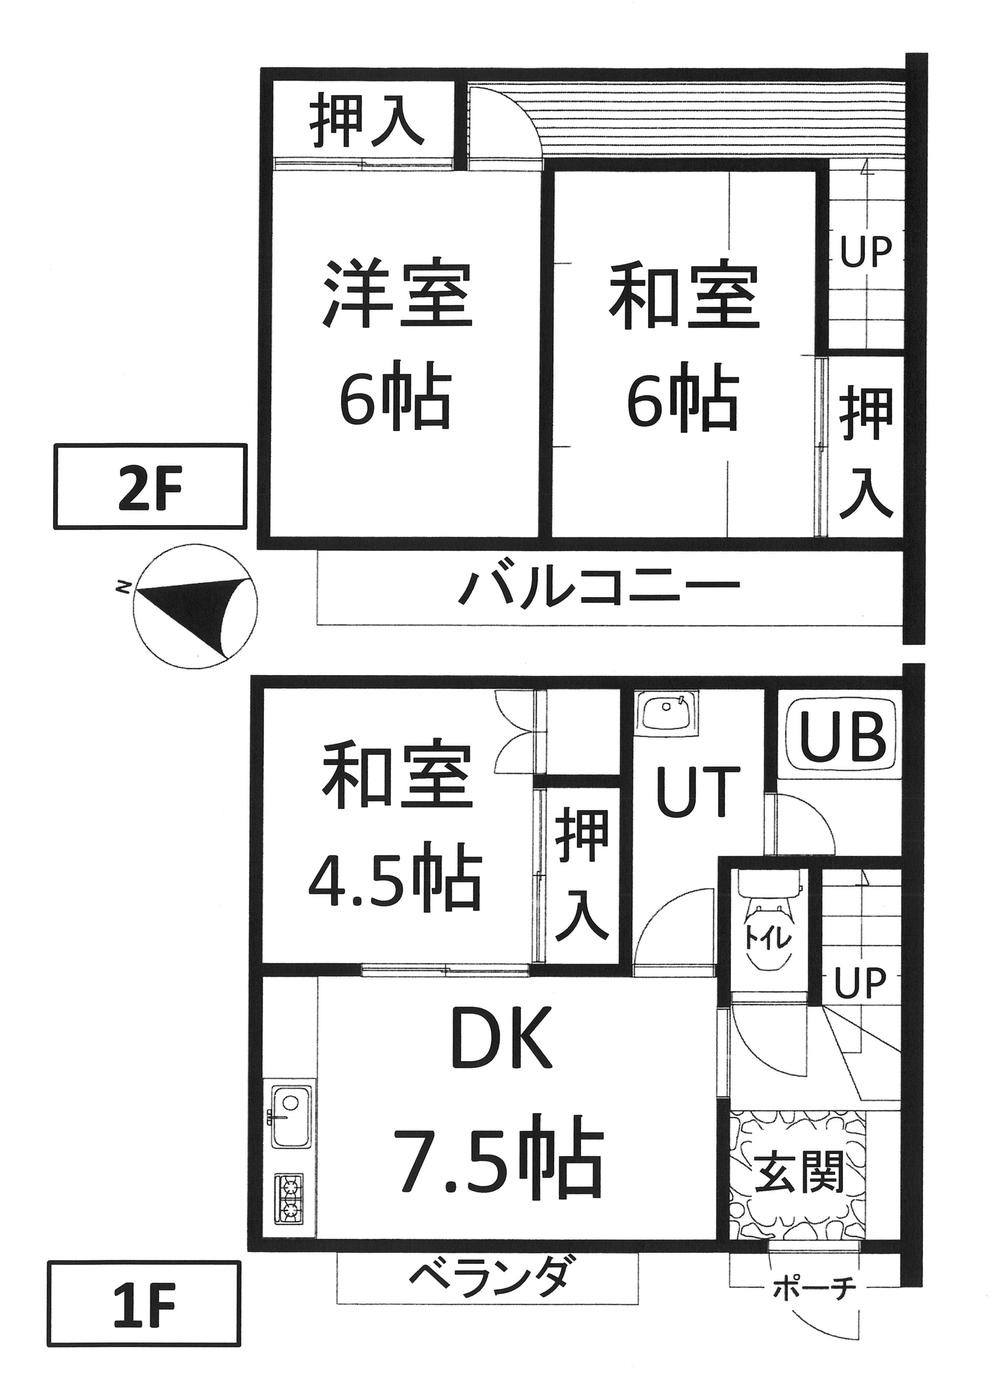 Floor plan. 5.8 million yen, 3DK, Land area 69.27 sq m , Building area 60.14 sq m floor plan